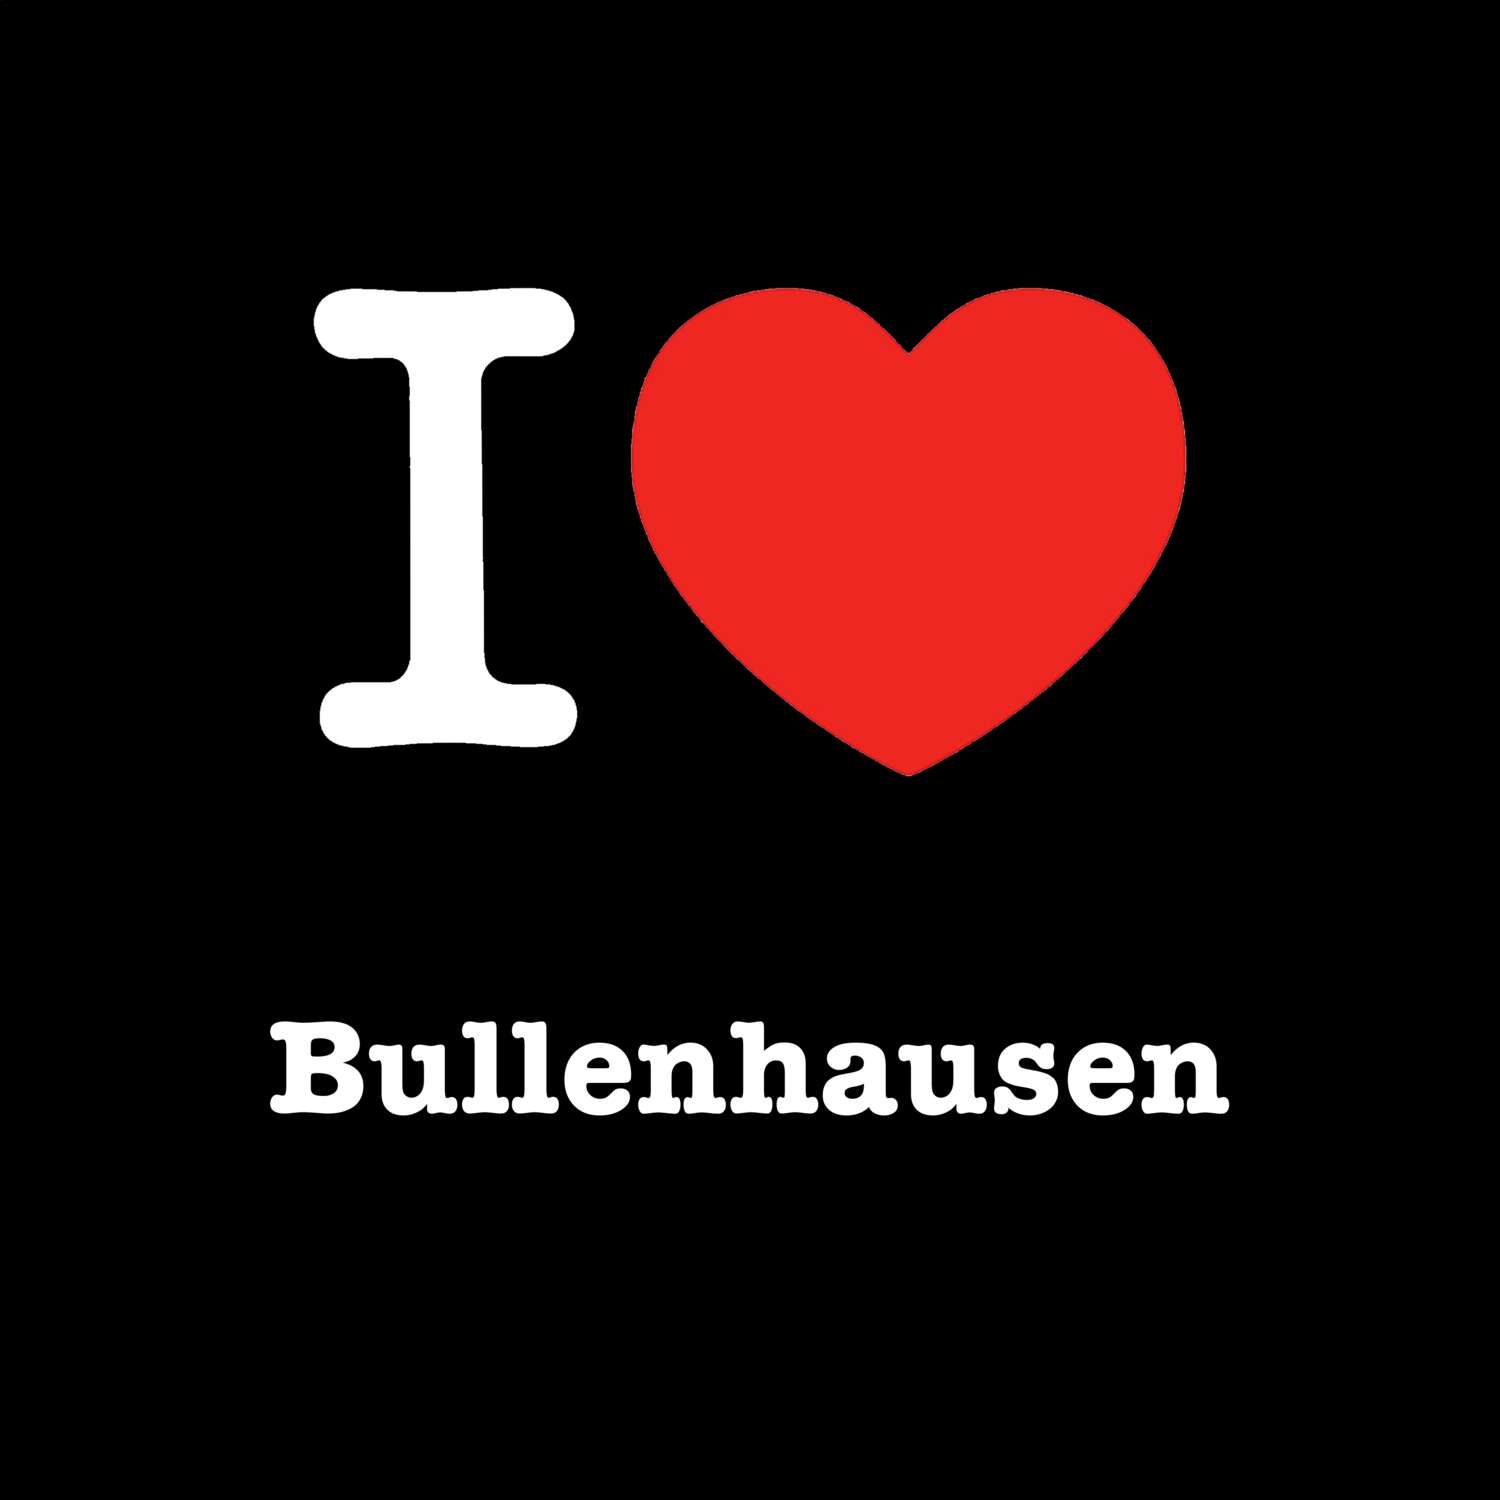 Bullenhausen T-Shirt »I love«